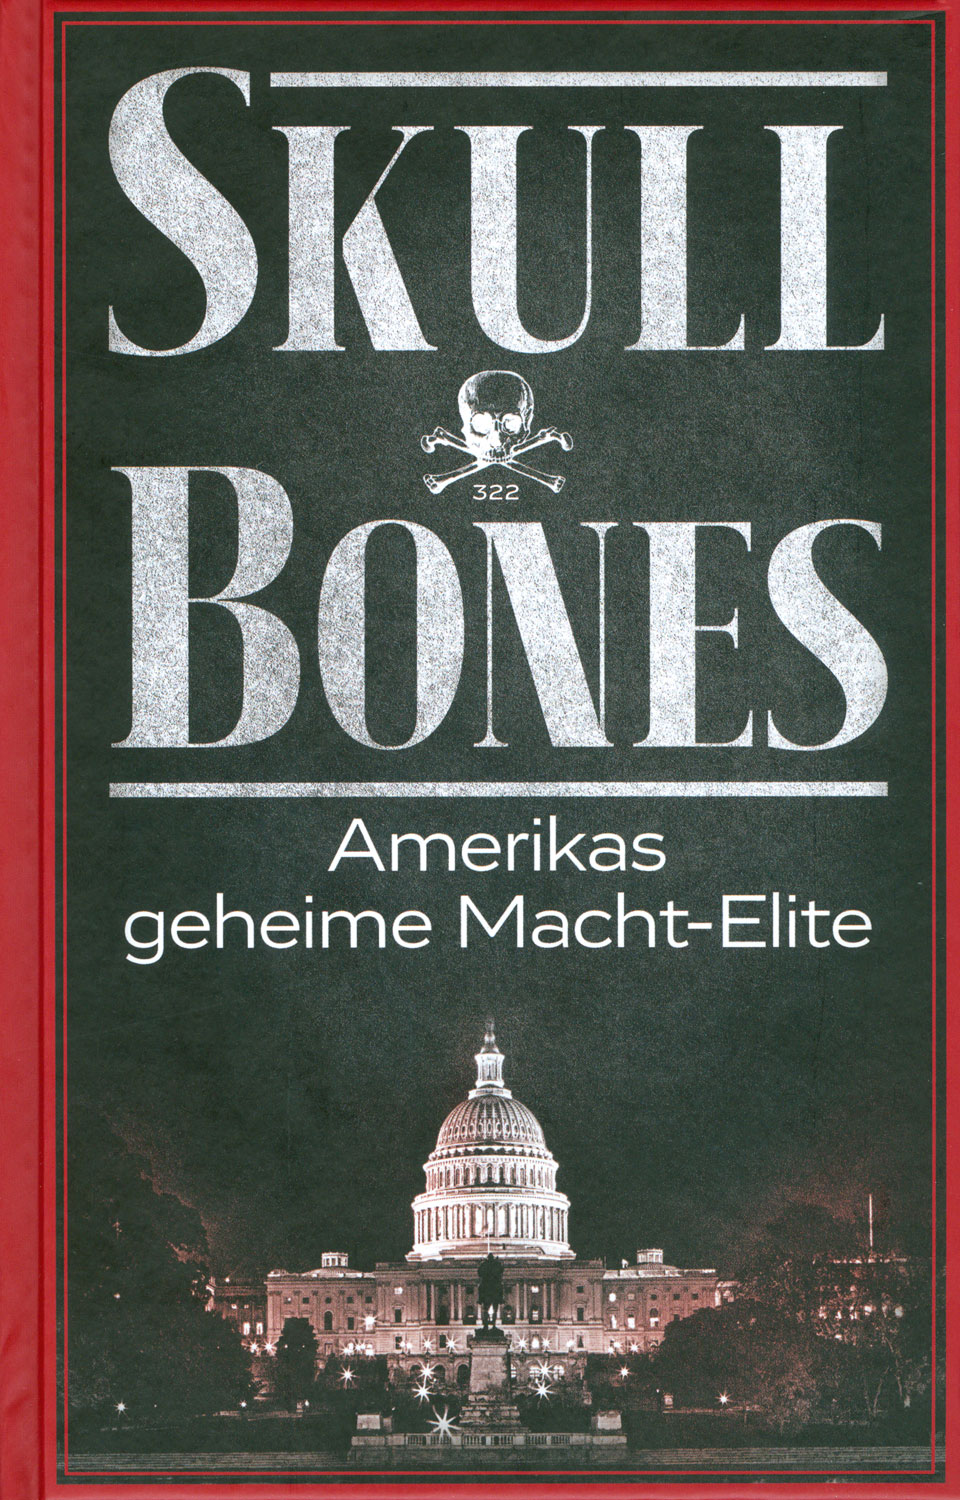 george bush skull and bones